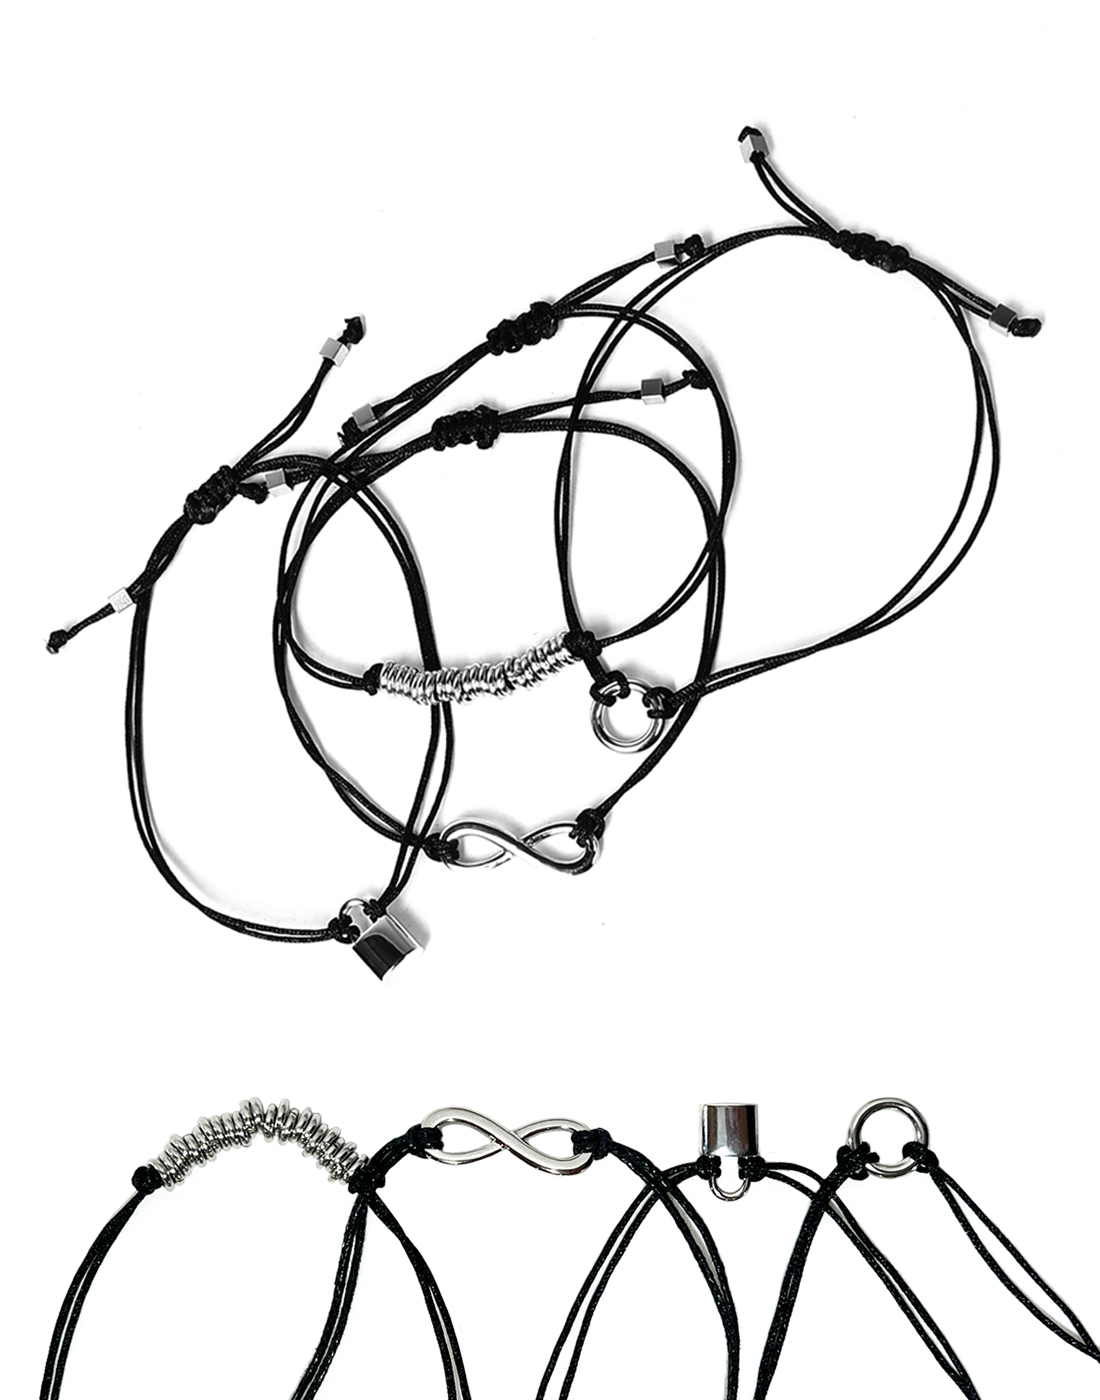 [1+1] symbol pendant thin string bracelet